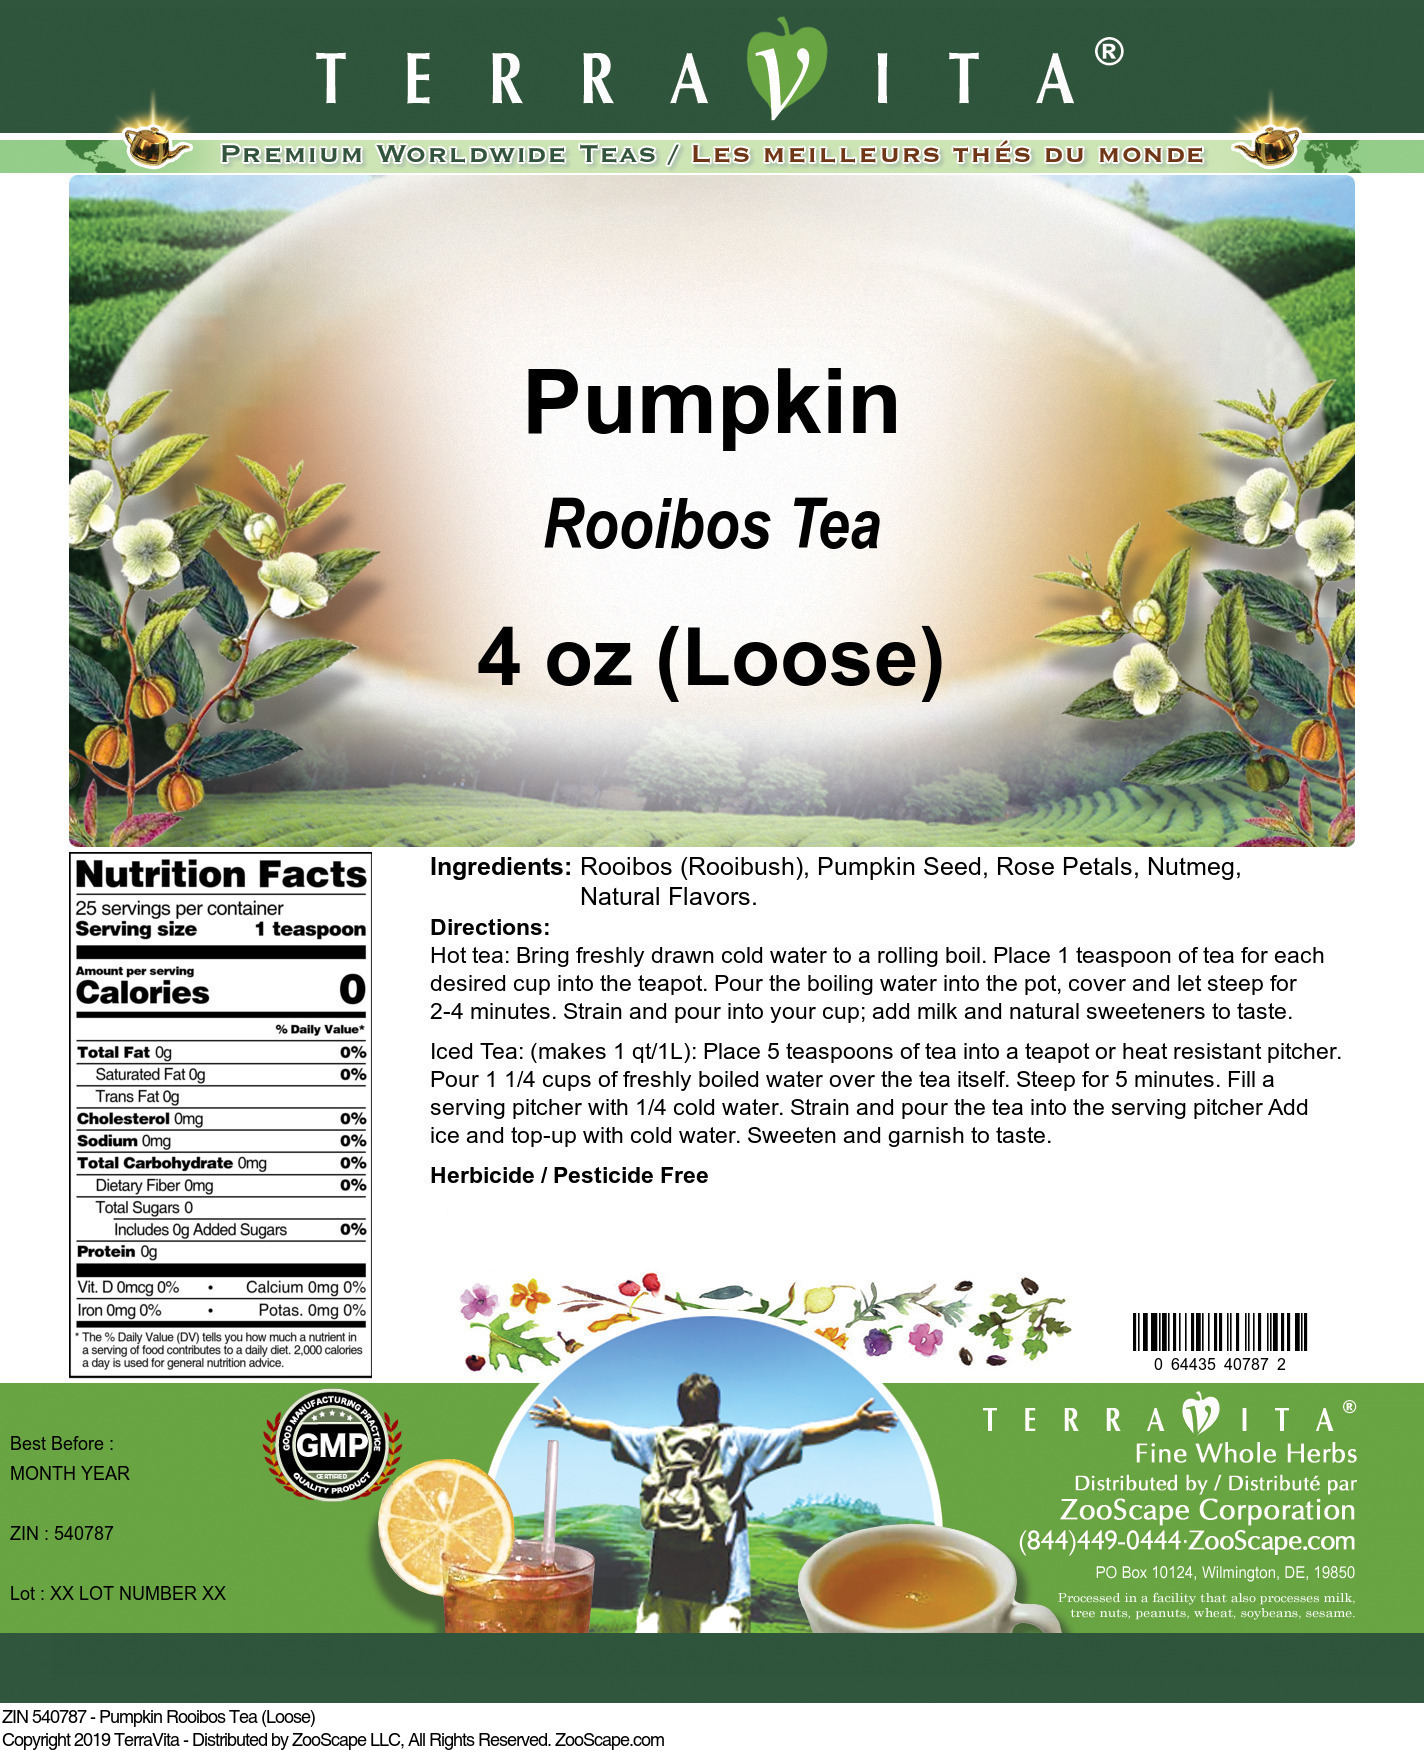 Pumpkin Rooibos Tea (Loose) - Label